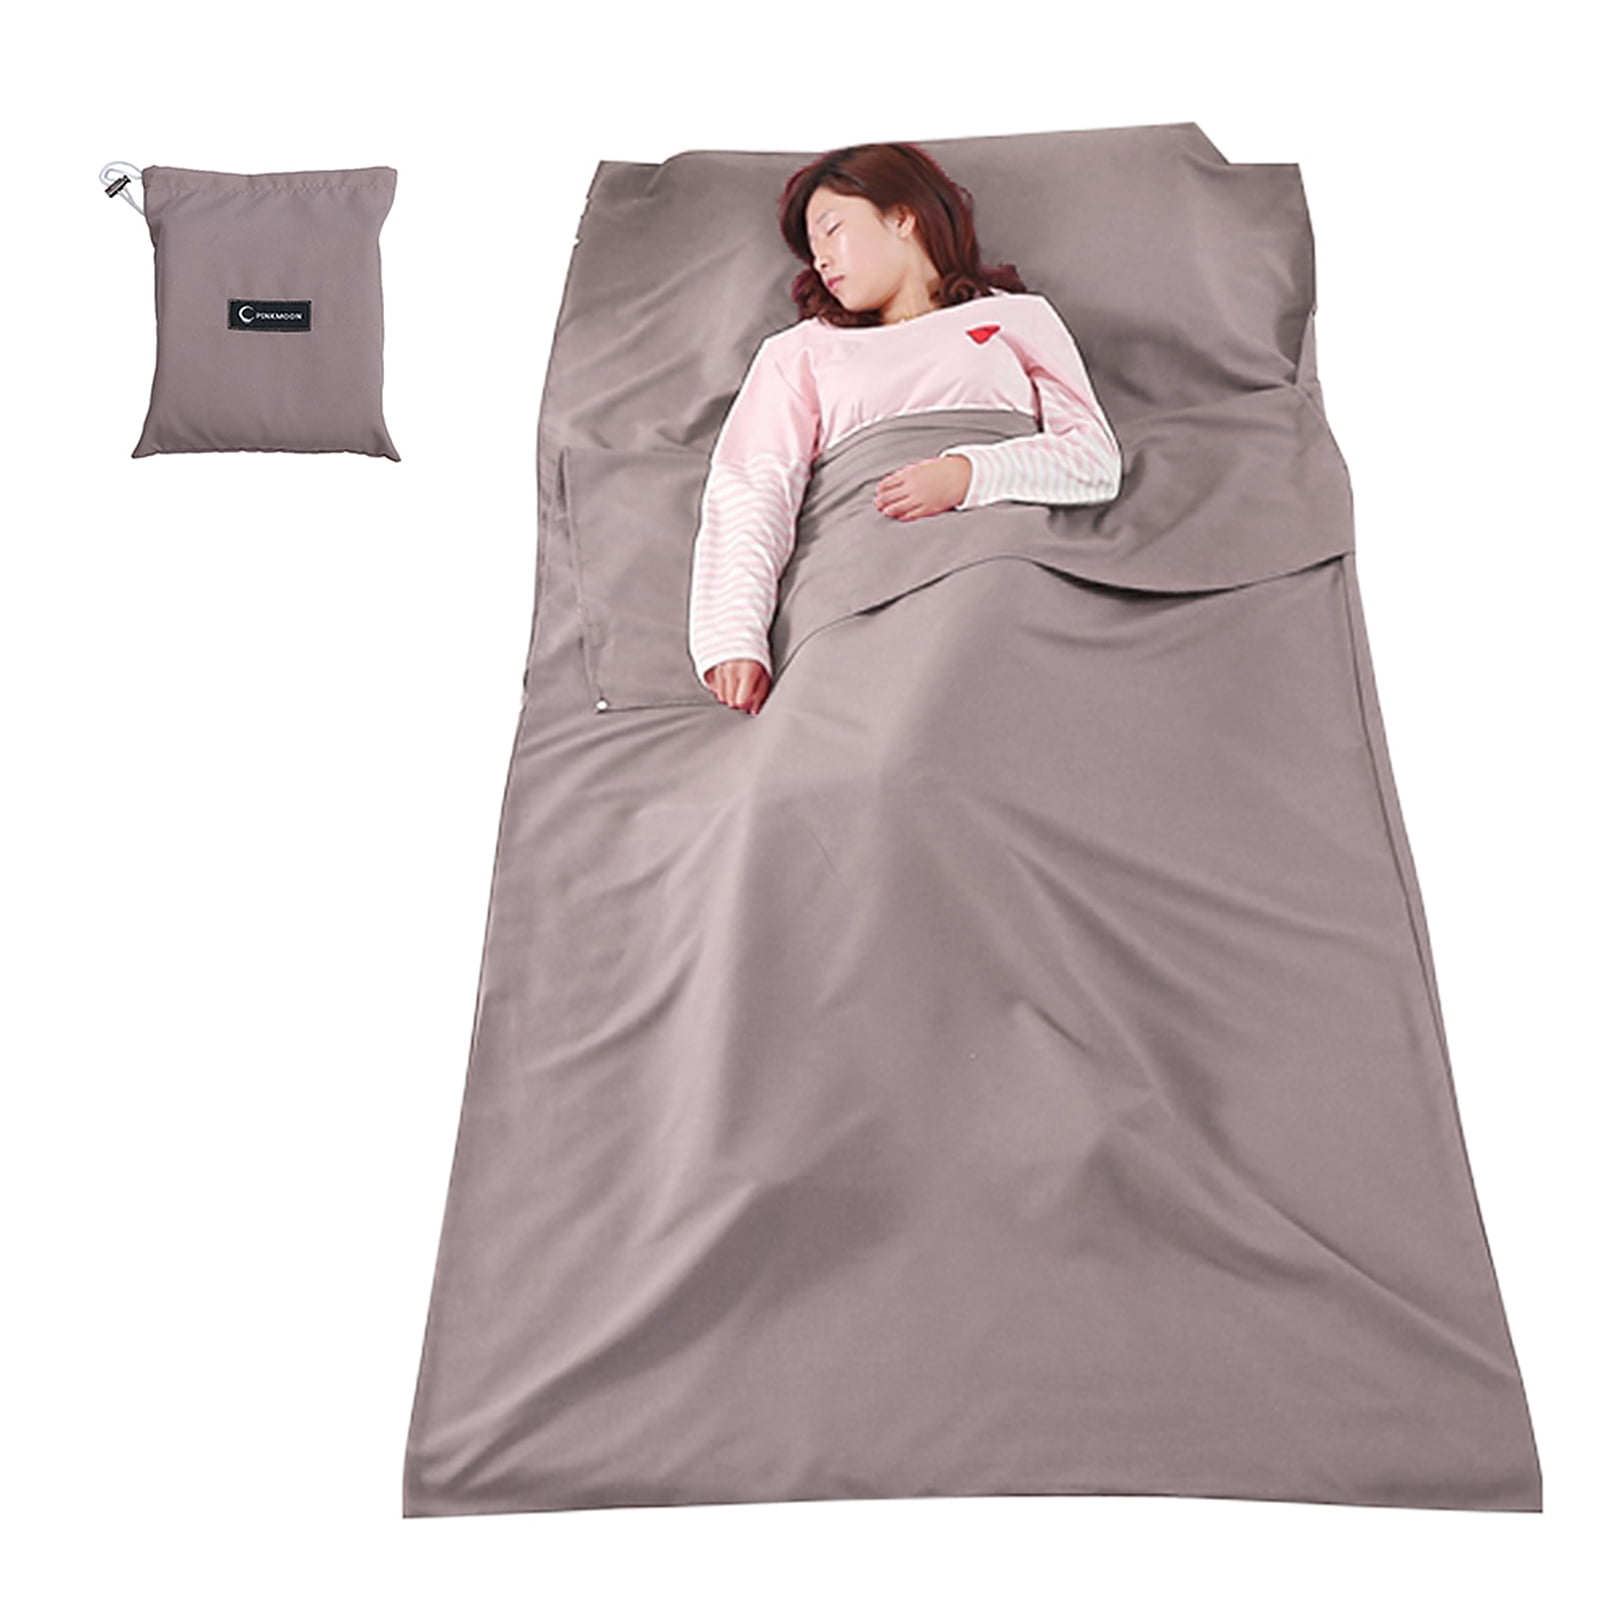 Sleeping Bag Liner and Travel Pillow Dream In Bliss Hammock Bliss Sleep Sack Travel and Camping Sleeping Sheet 